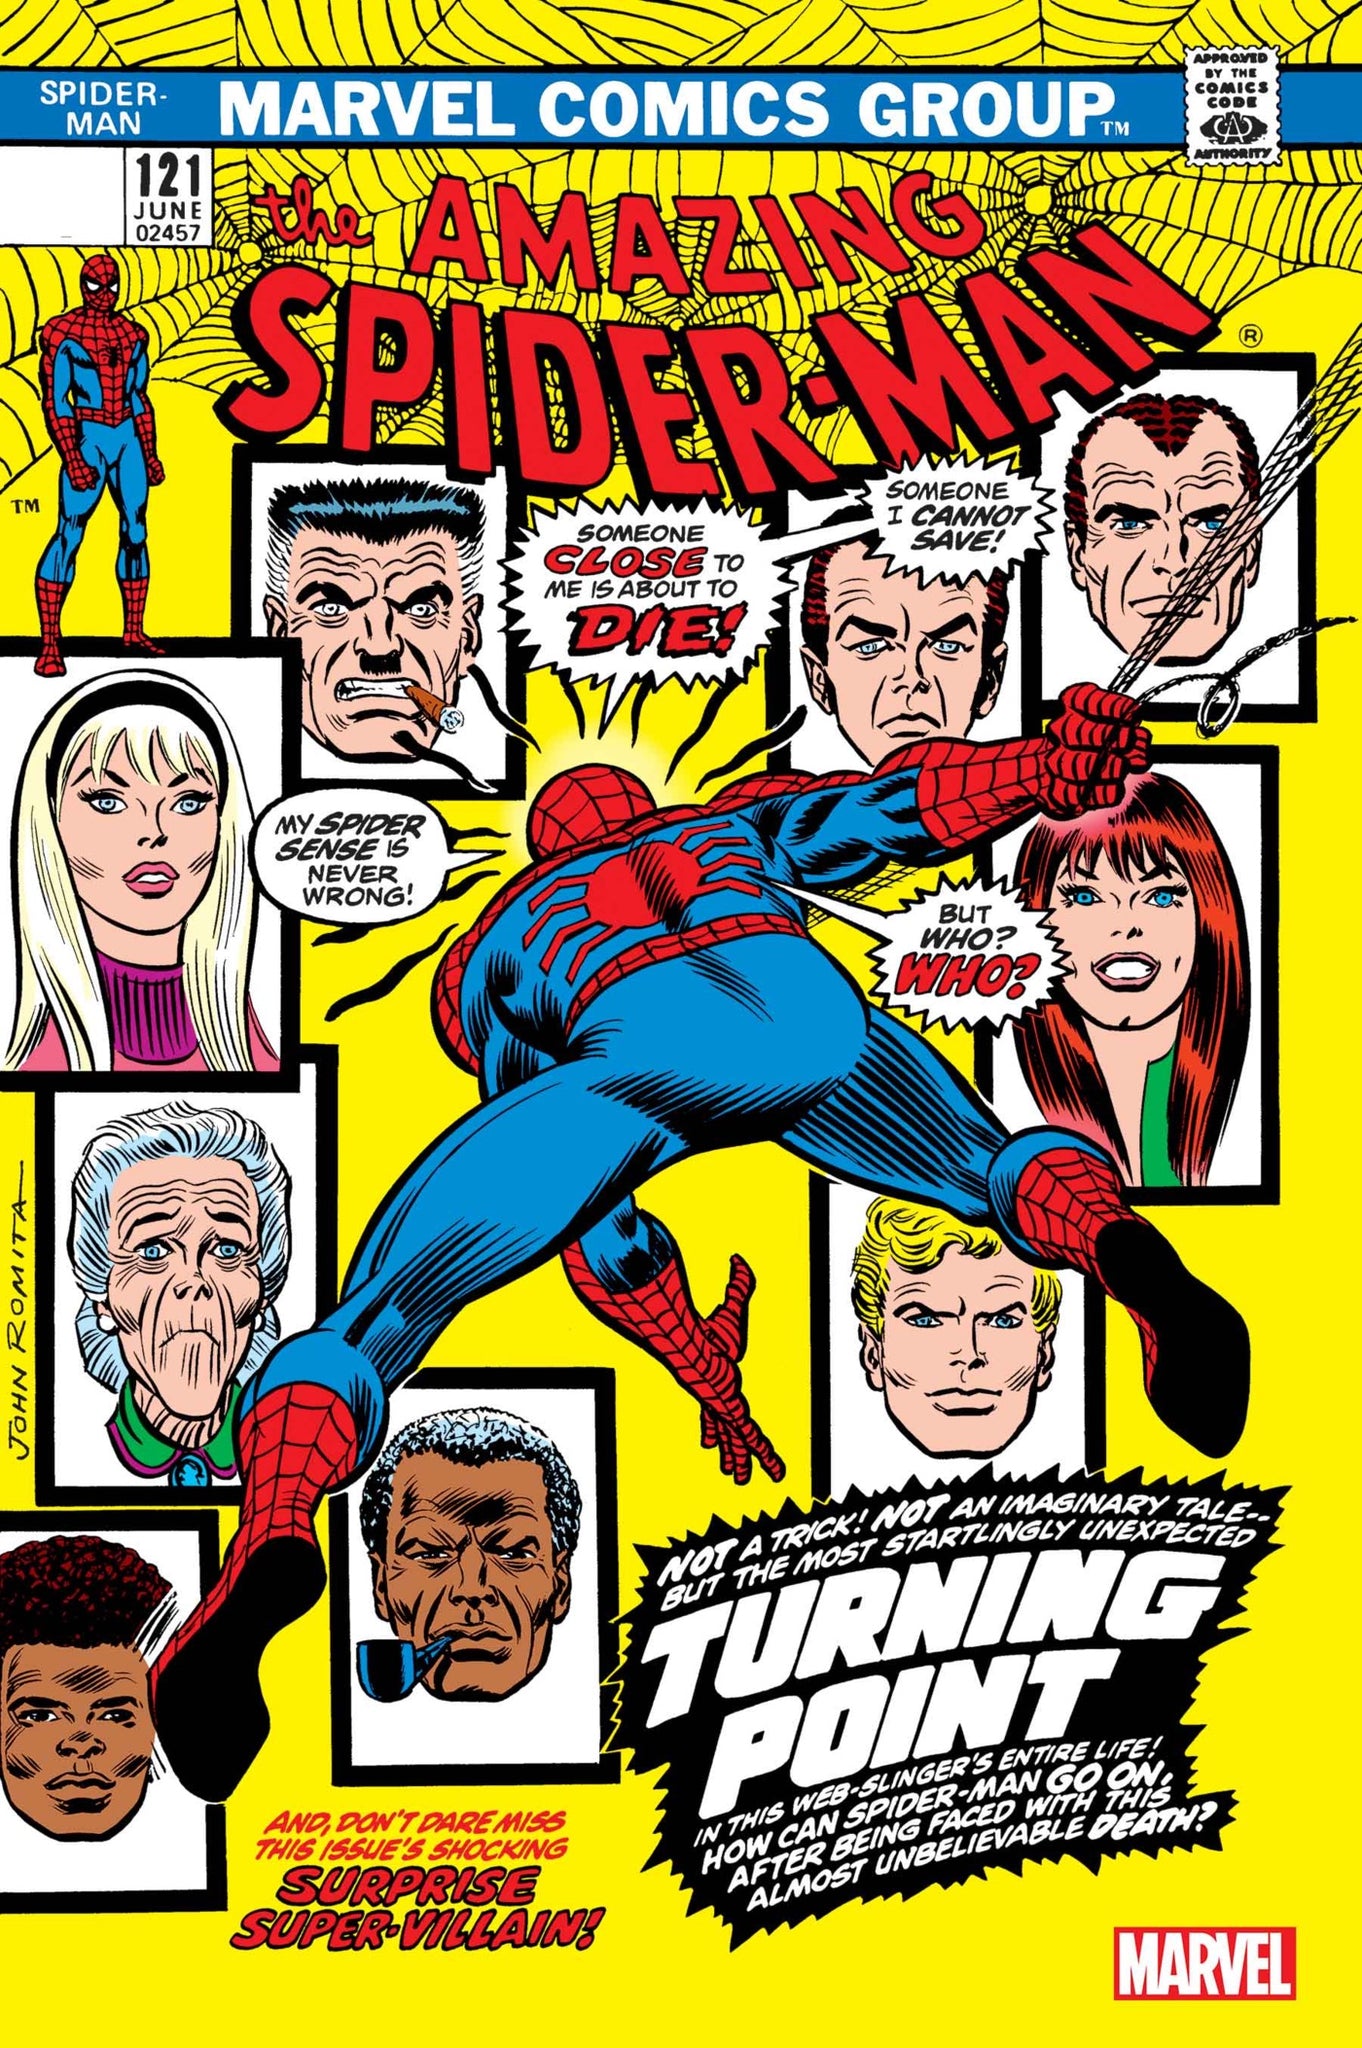 AMAZING SPIDER-MAN #121 FACSIMILE EDITION Exclusive FOIL Variant